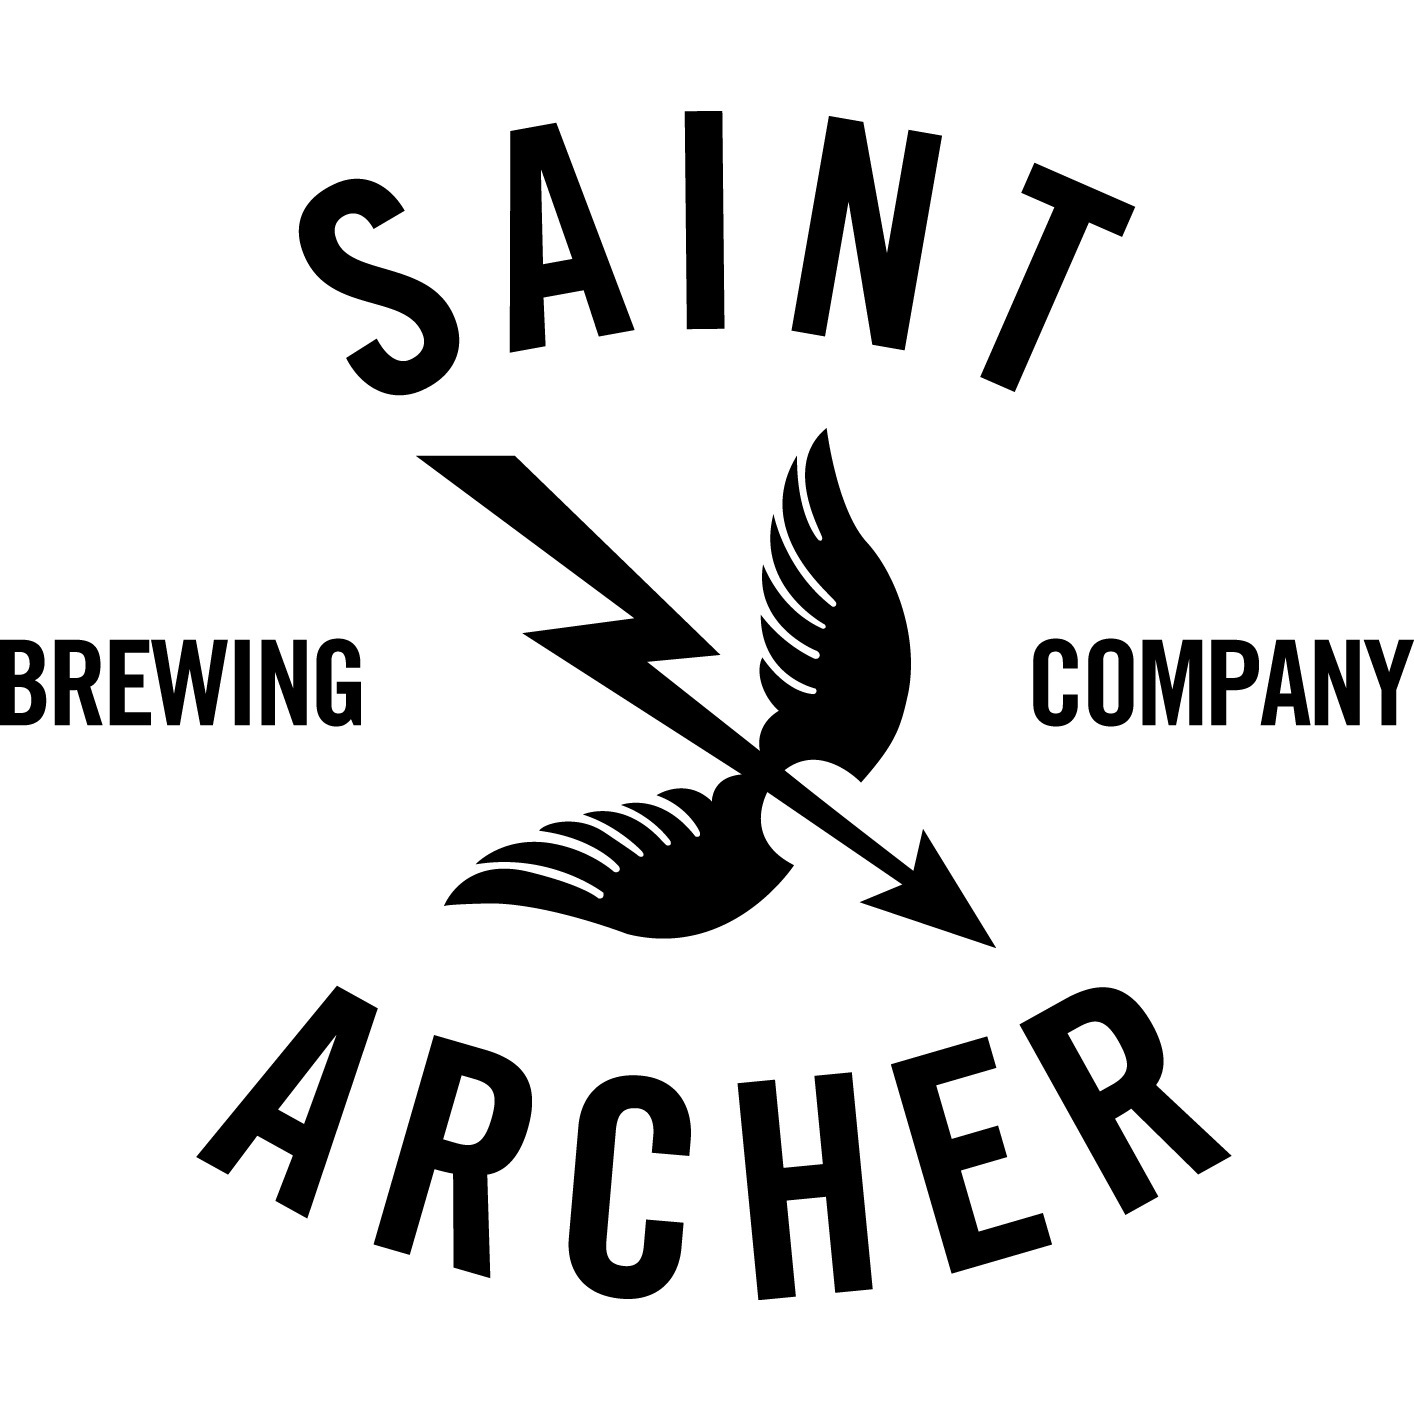 Saint archer brewing company